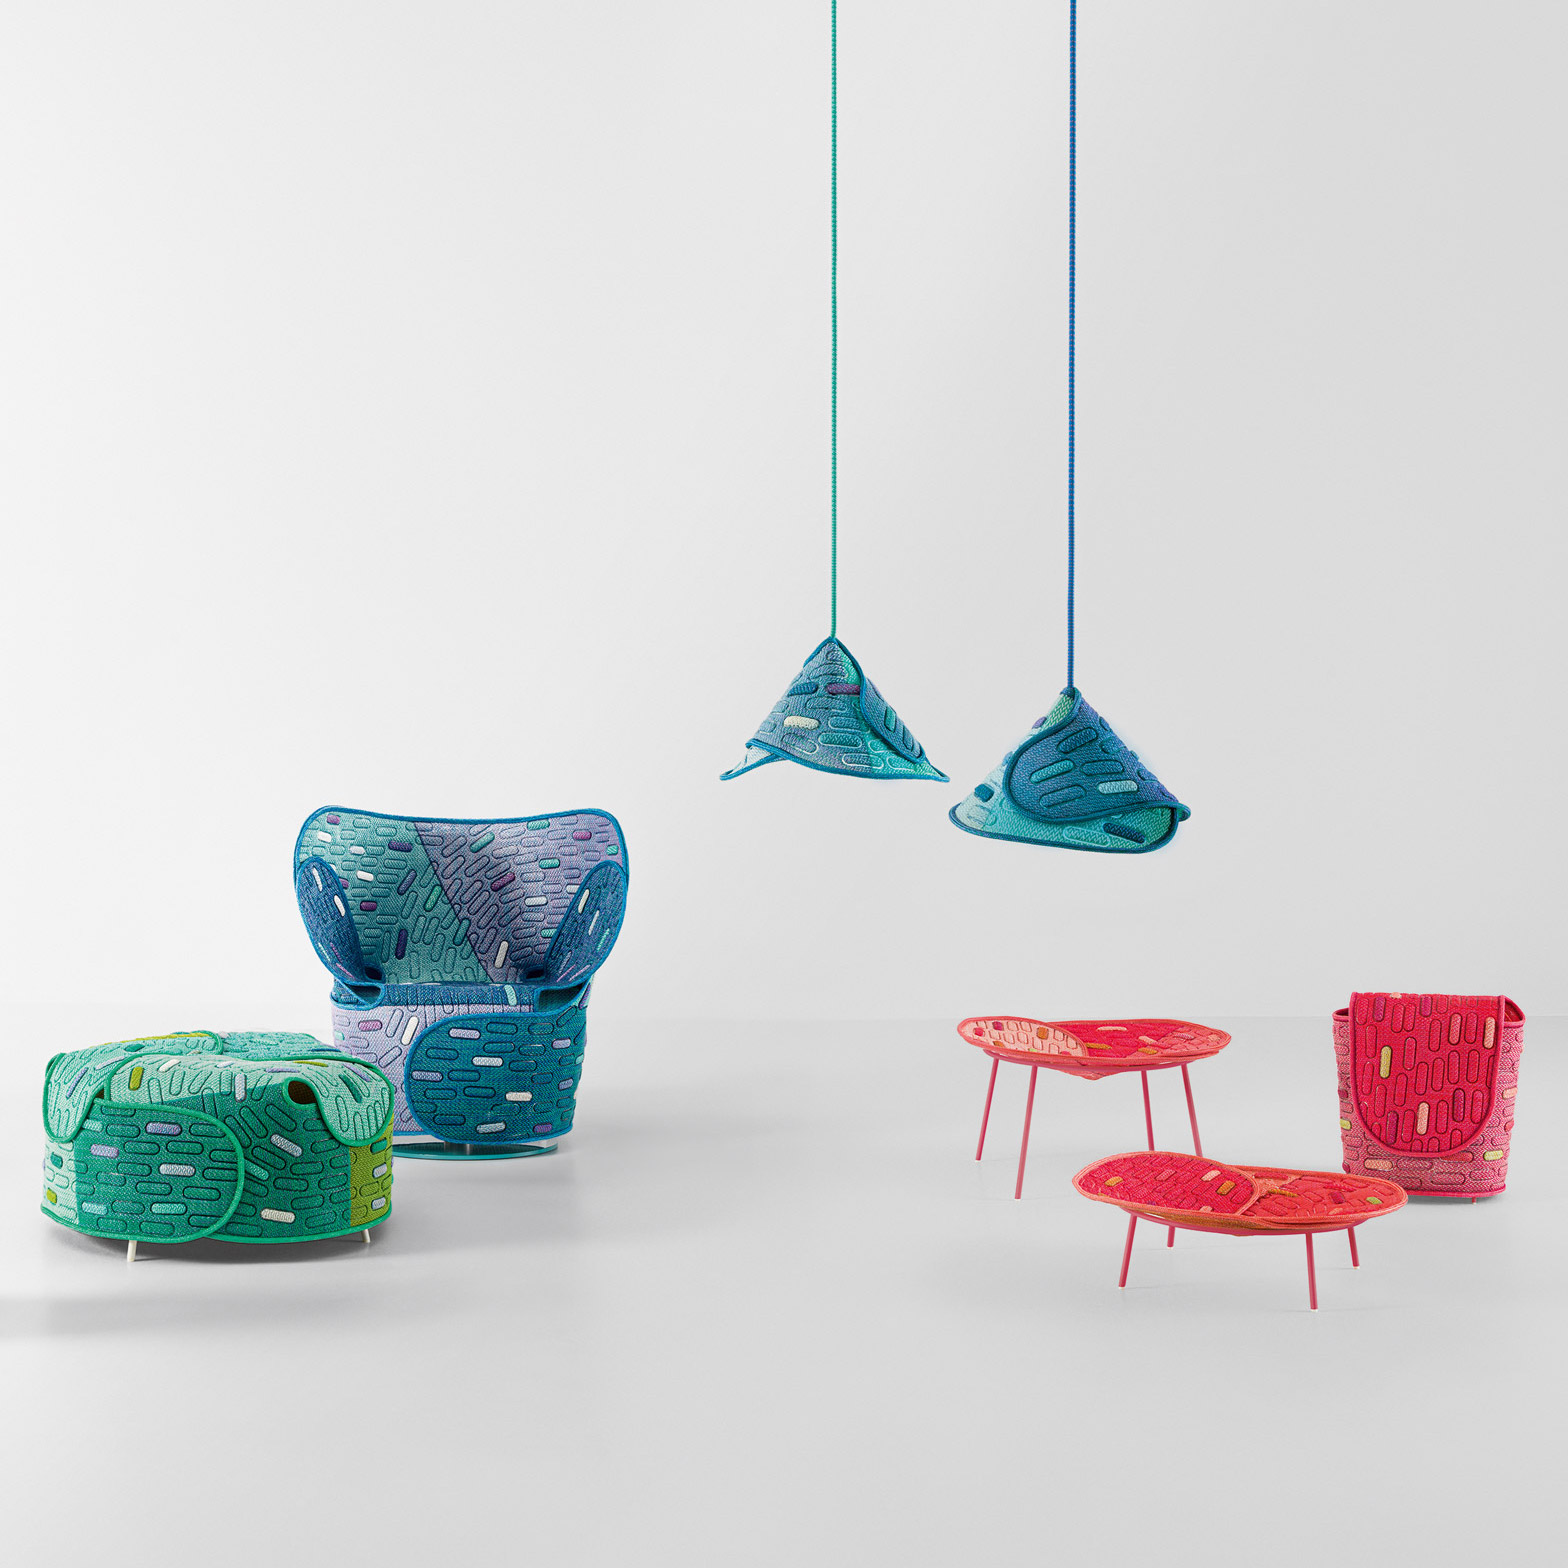 Nendo furniture for Paola Lenti made from textile scraps